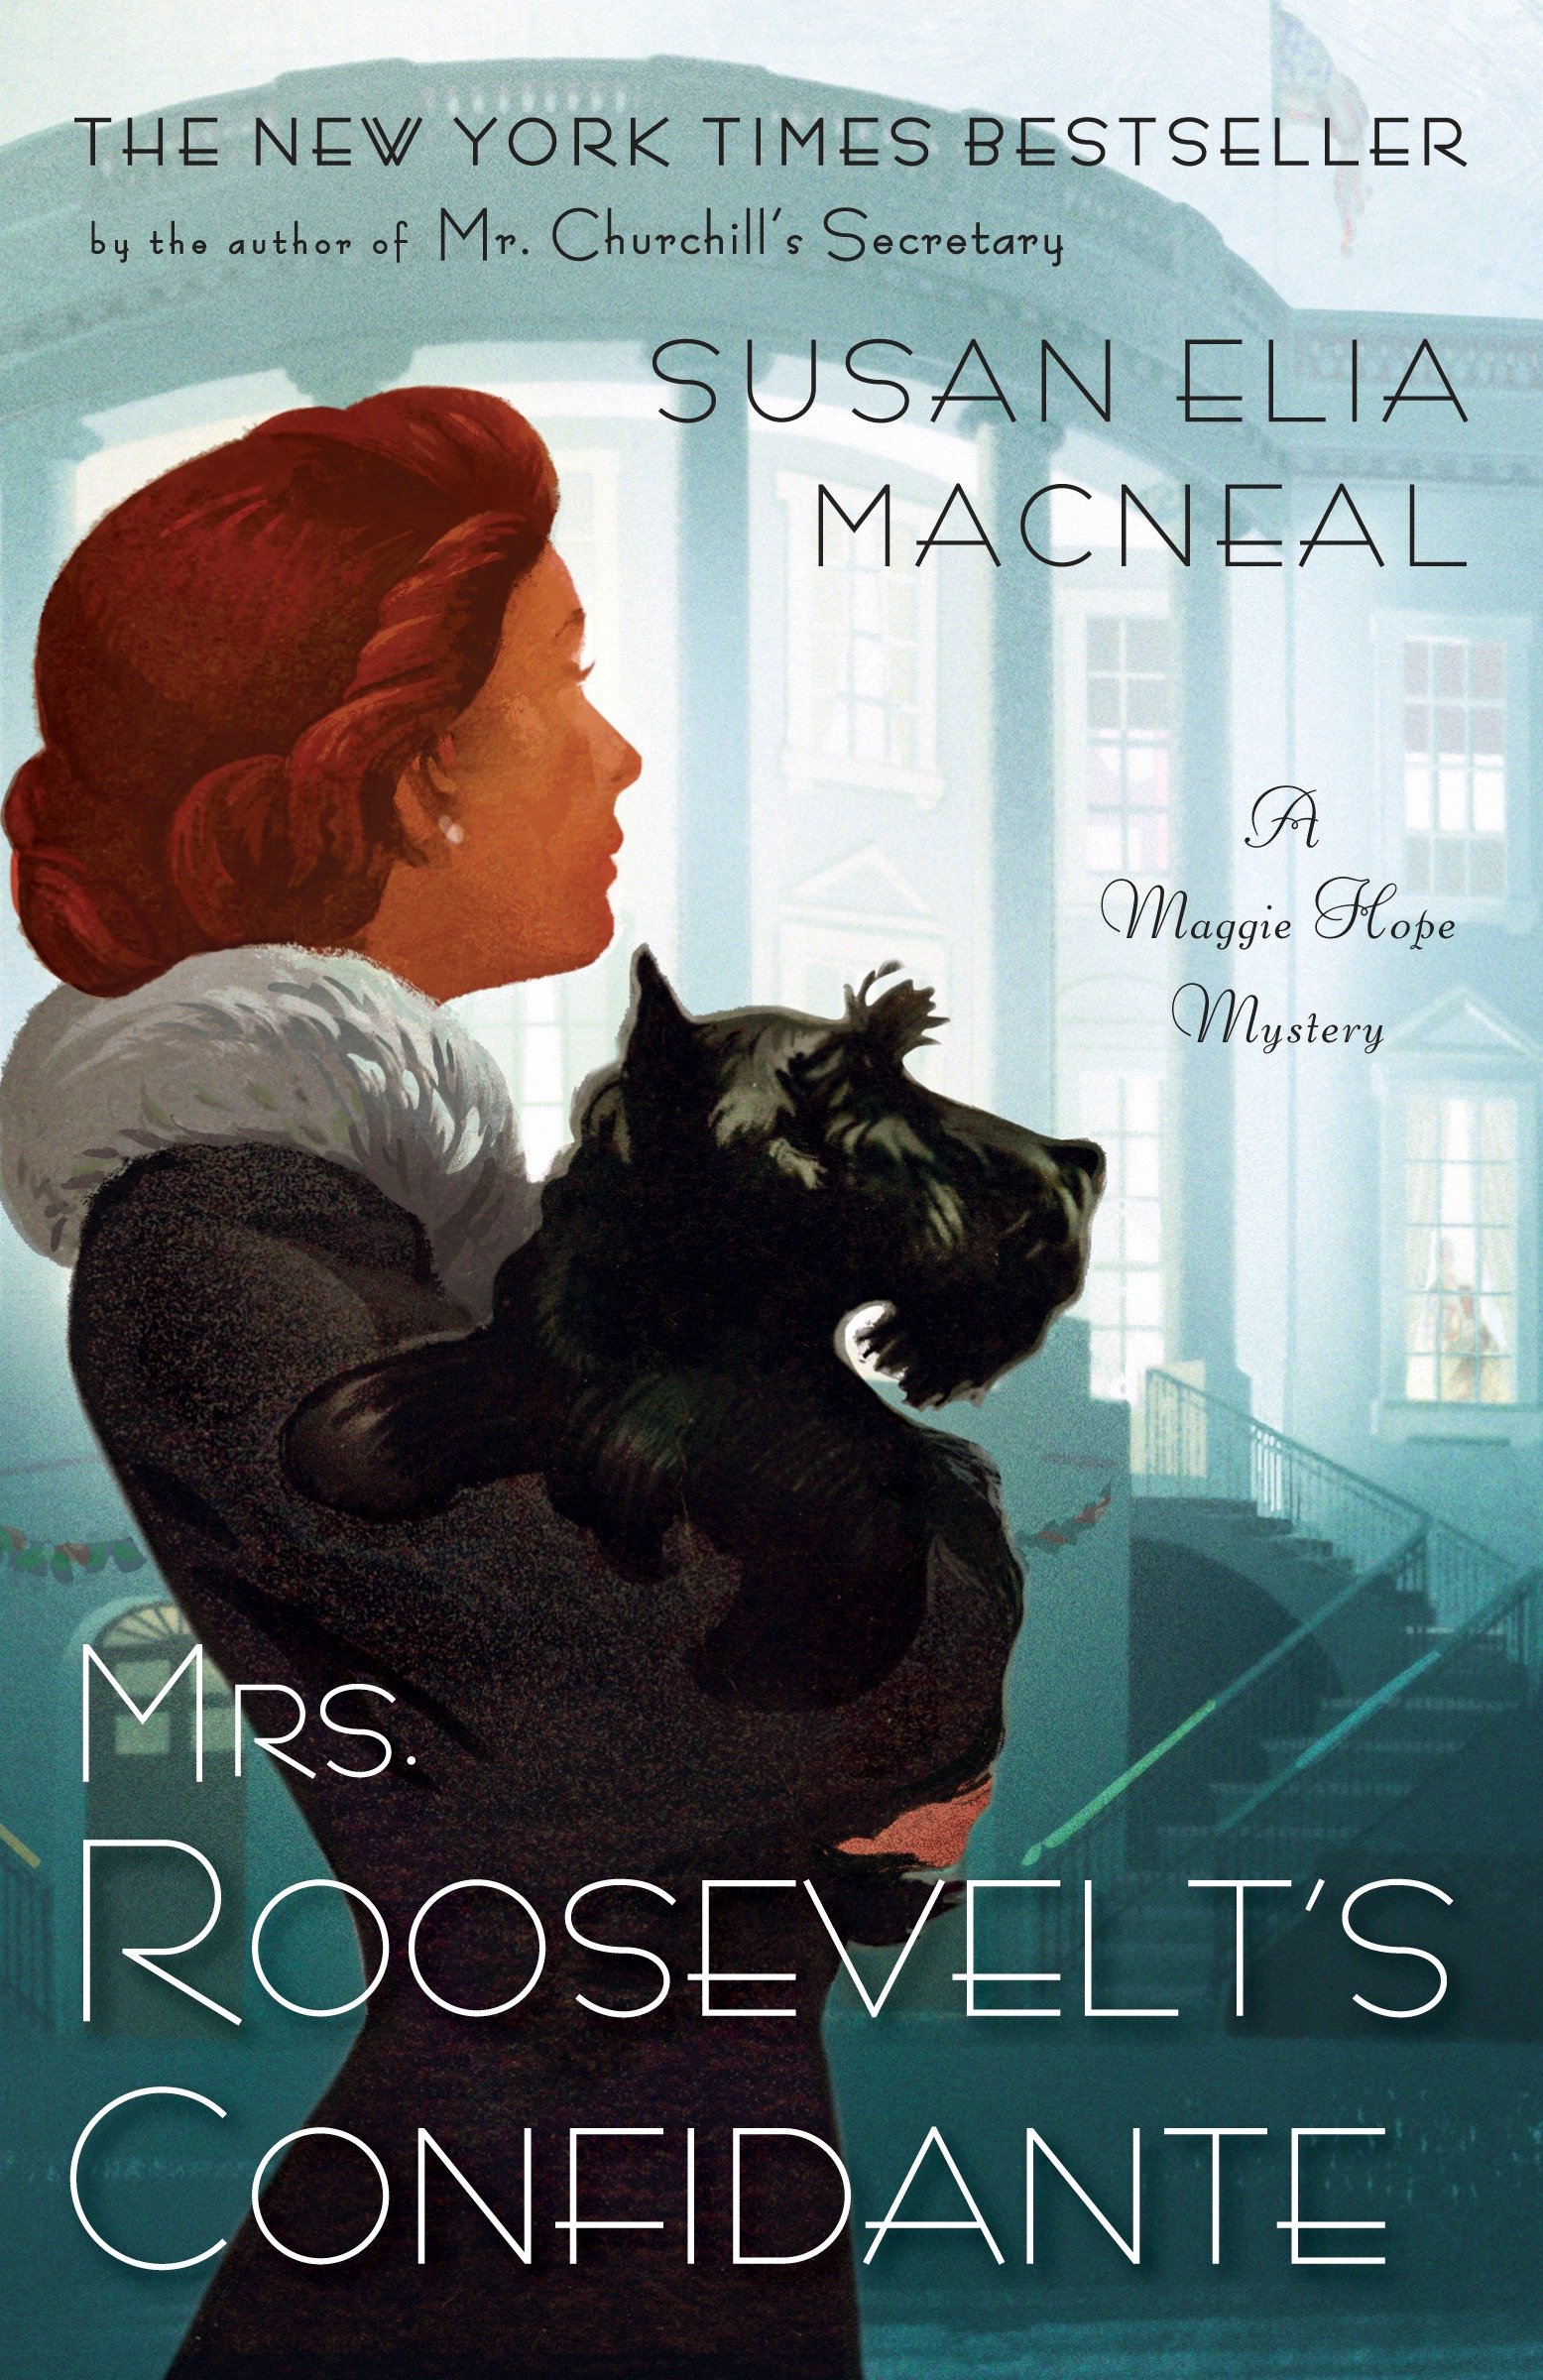 Mrs. Roosevelt's confidante cover image